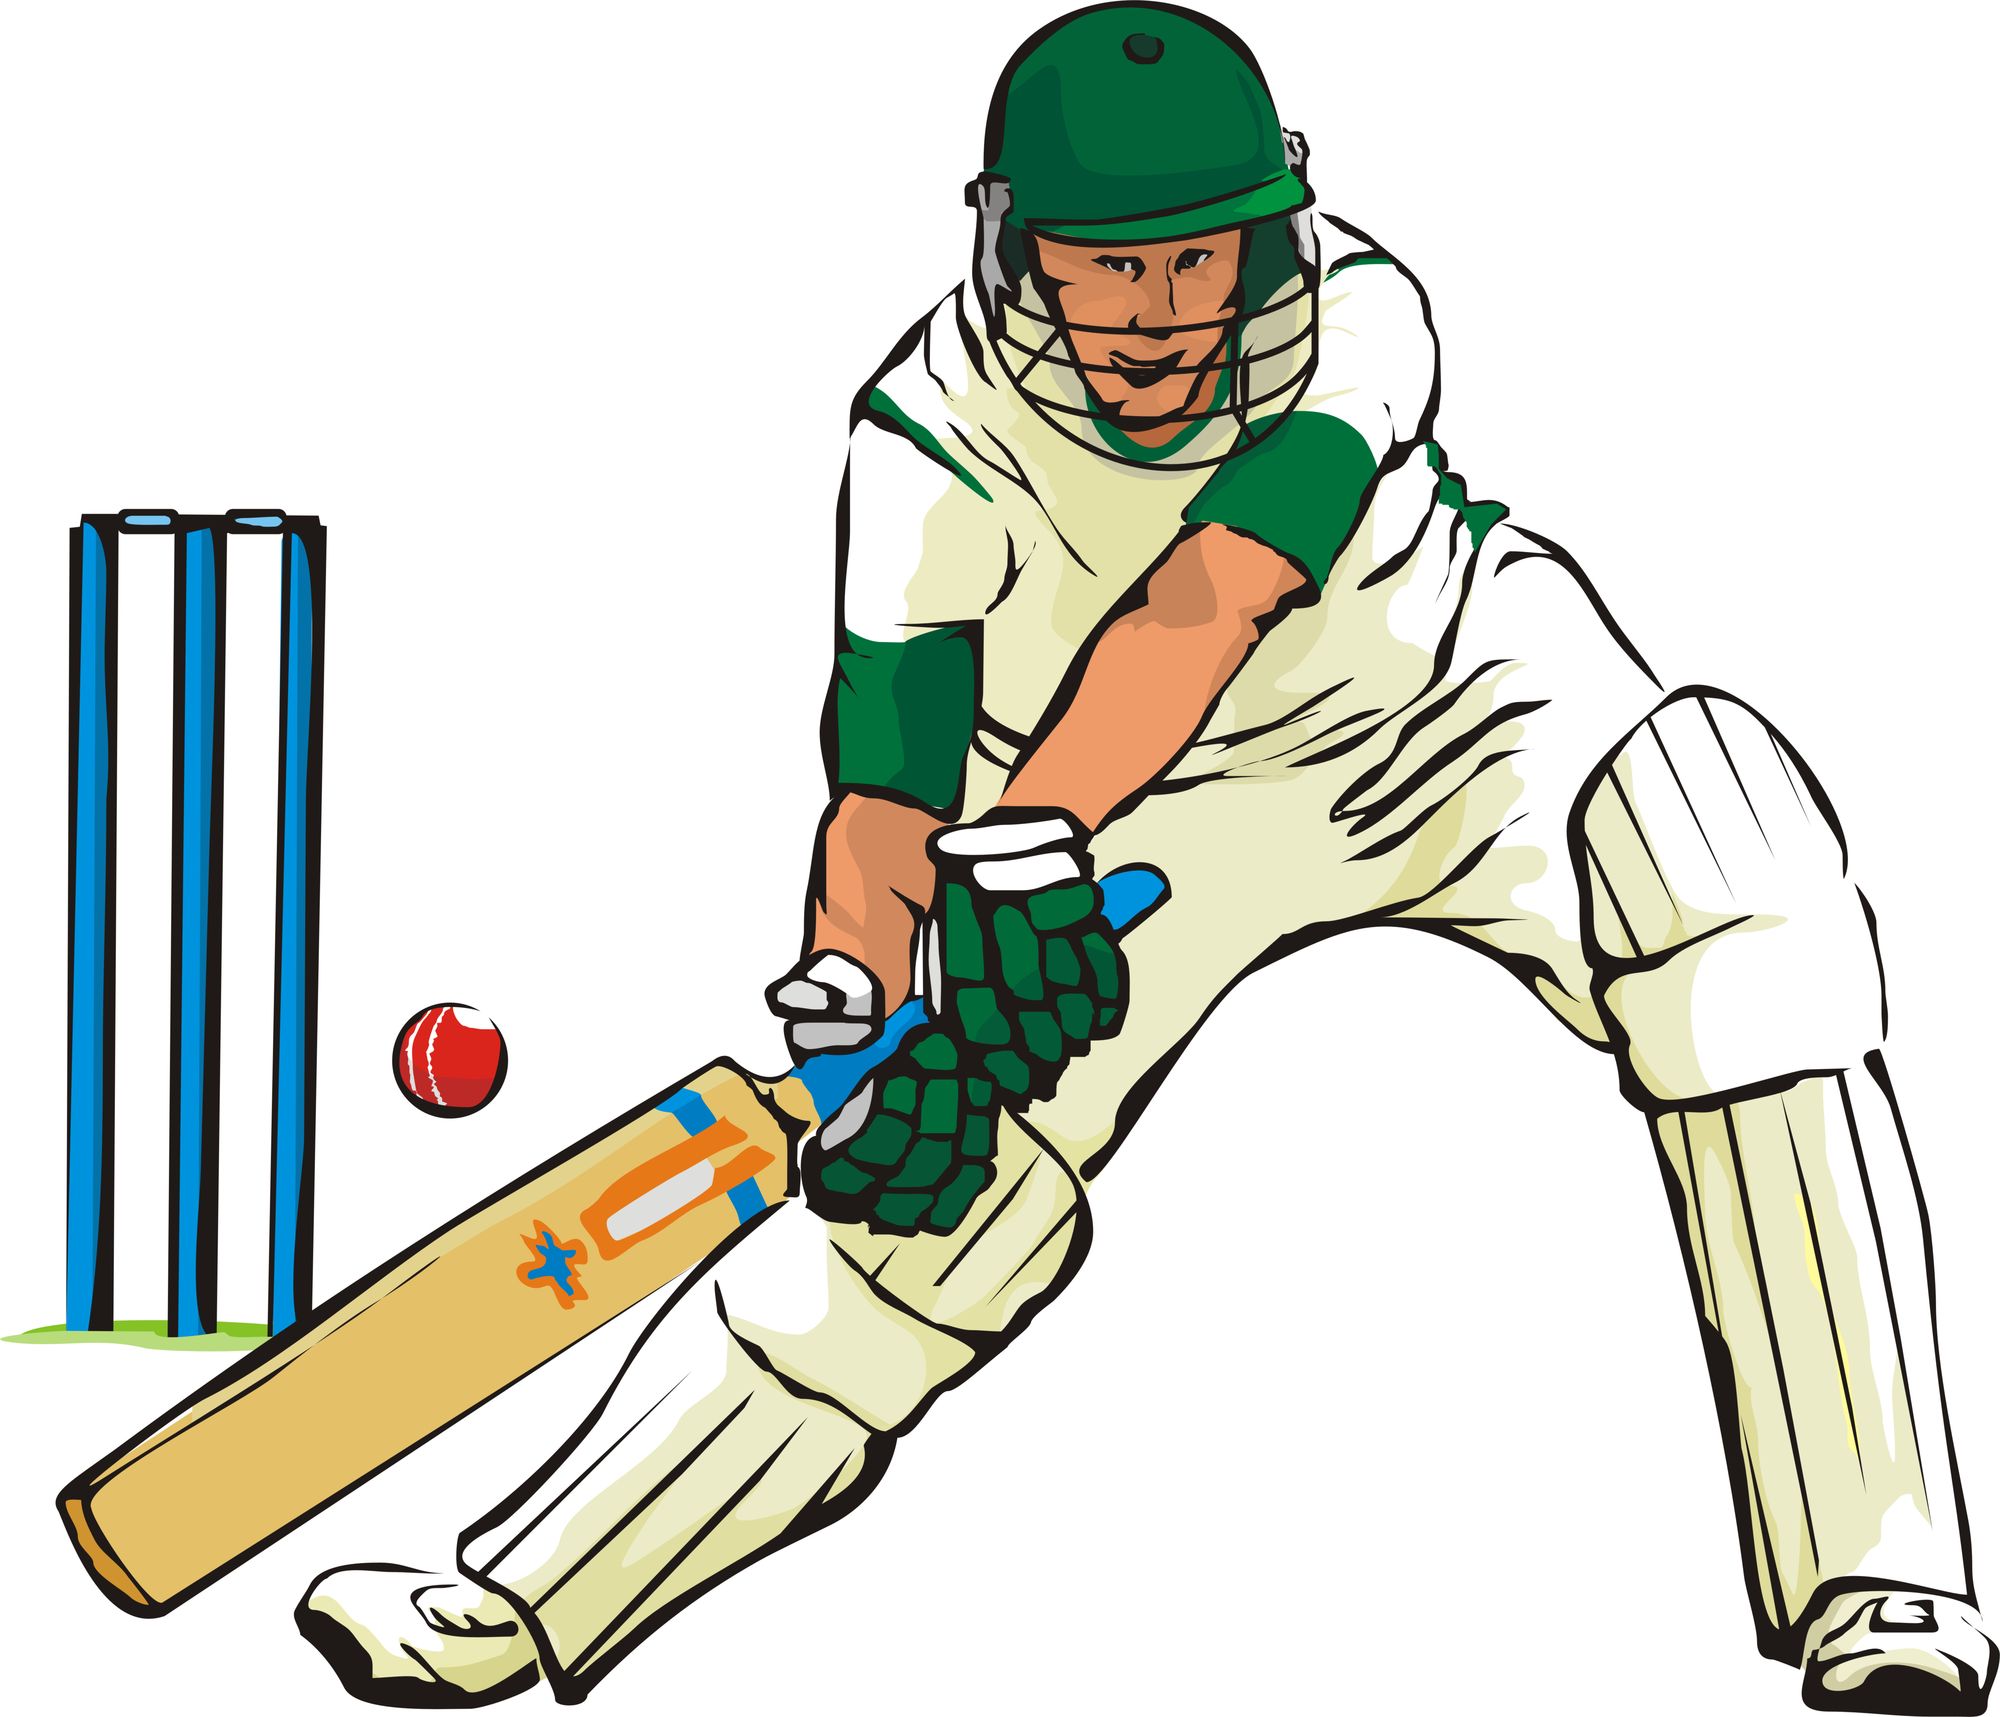 Cricket Cartoon Wallpapers - Wallpaper Cave